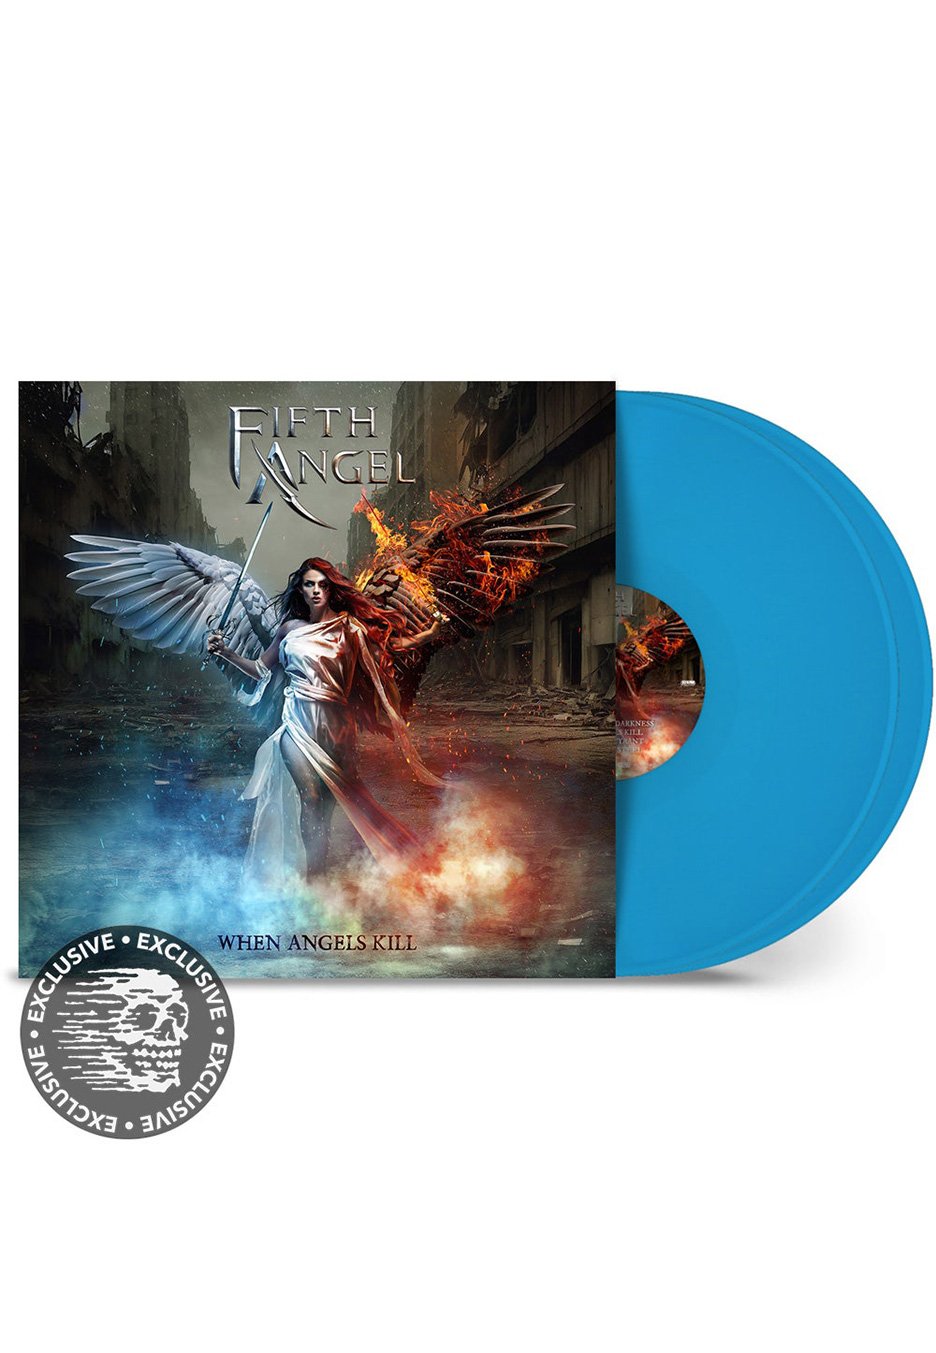 Fifth Angel - When Angels Kill Ltd. Sky Blue - Colored 2 Vinyl